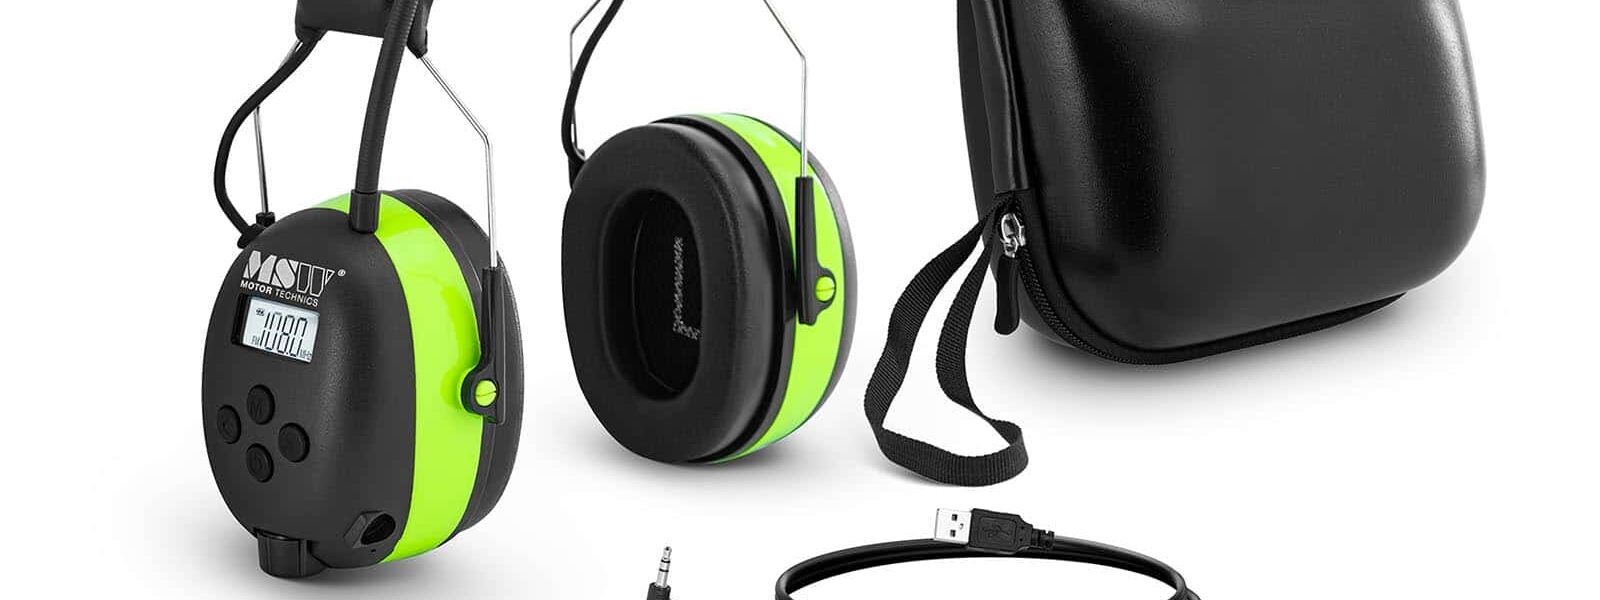 Gehörschutz mit Bluetooth – Mikrofon – LCD-Display – Akku – Grün